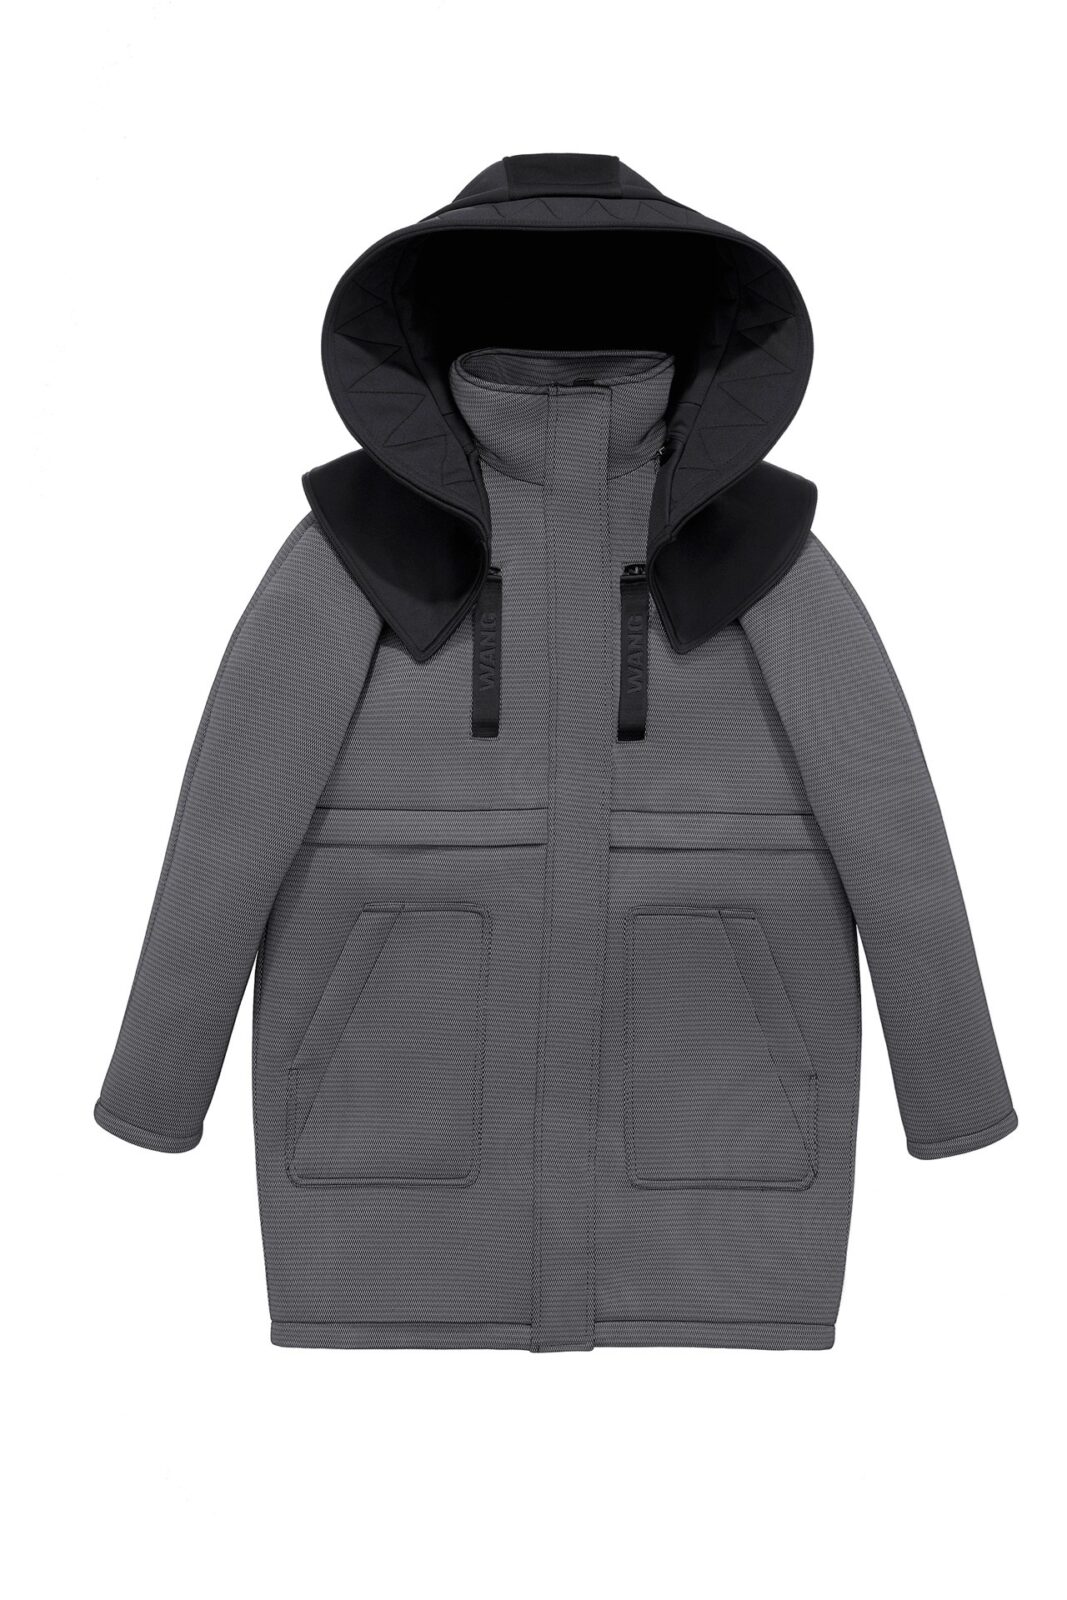 hooded-coat-179-99